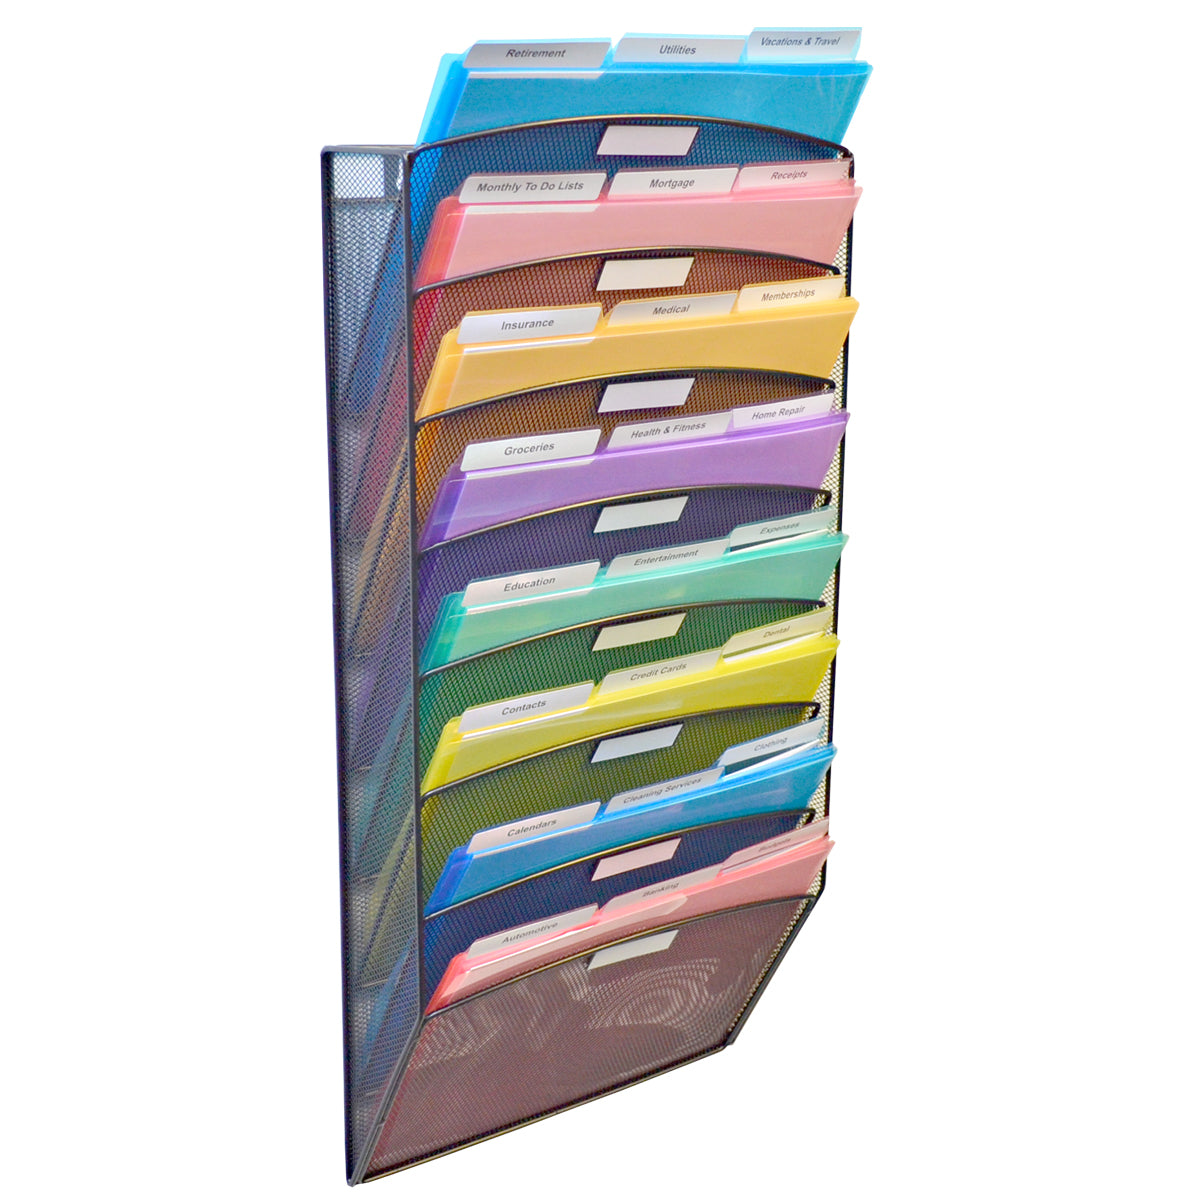 Ultimate Office Mesh Wall File Organizer, 15 Tier Vertical Mount Hanging File Sorter. Multipurpose Display Rack Includes 18, 3rd Cut PocketFile